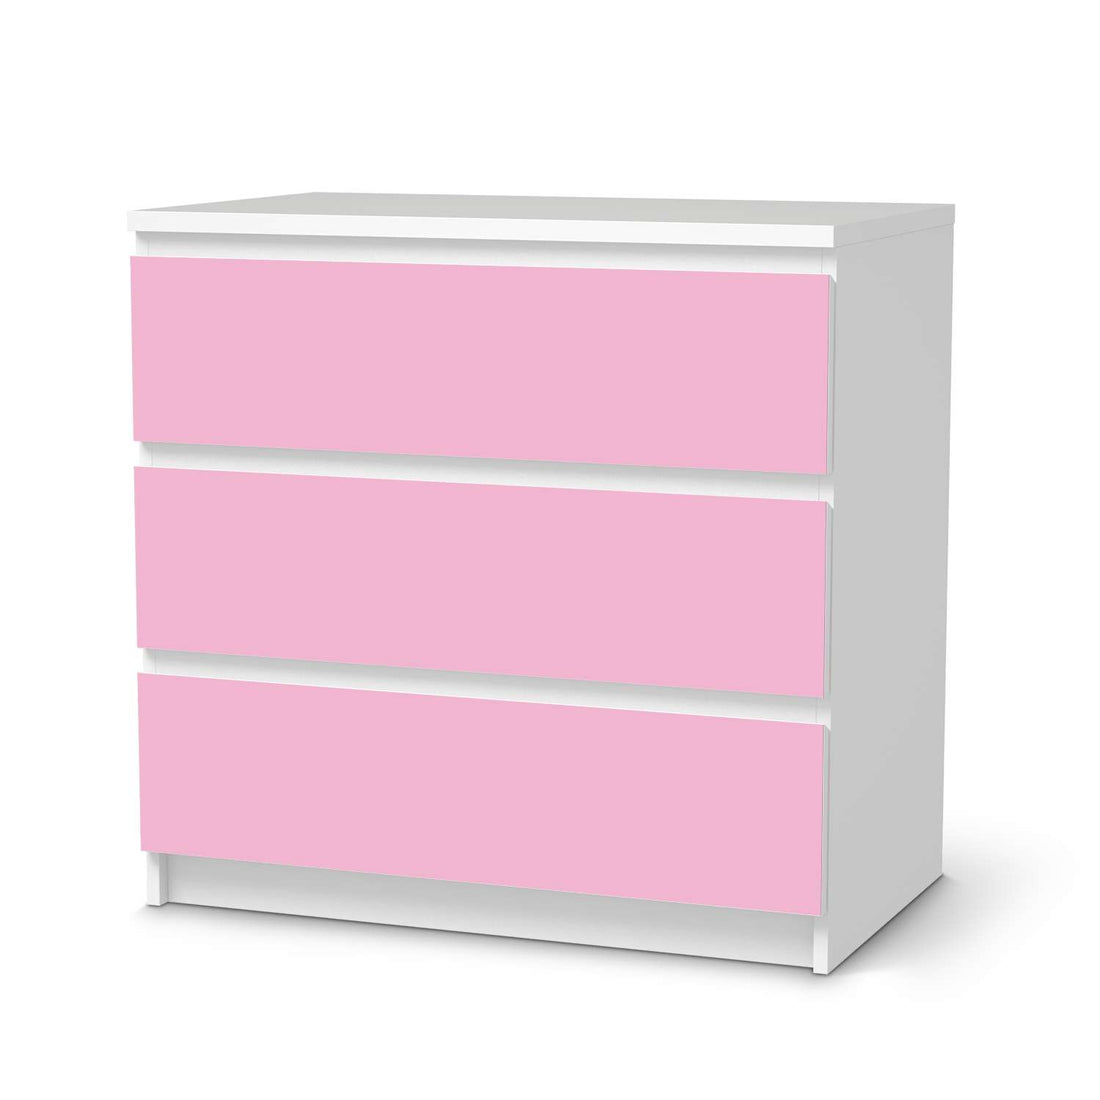 Klebefolie für Möbel Pink Light - IKEA Malm Kommode 3 Schubladen  - weiss